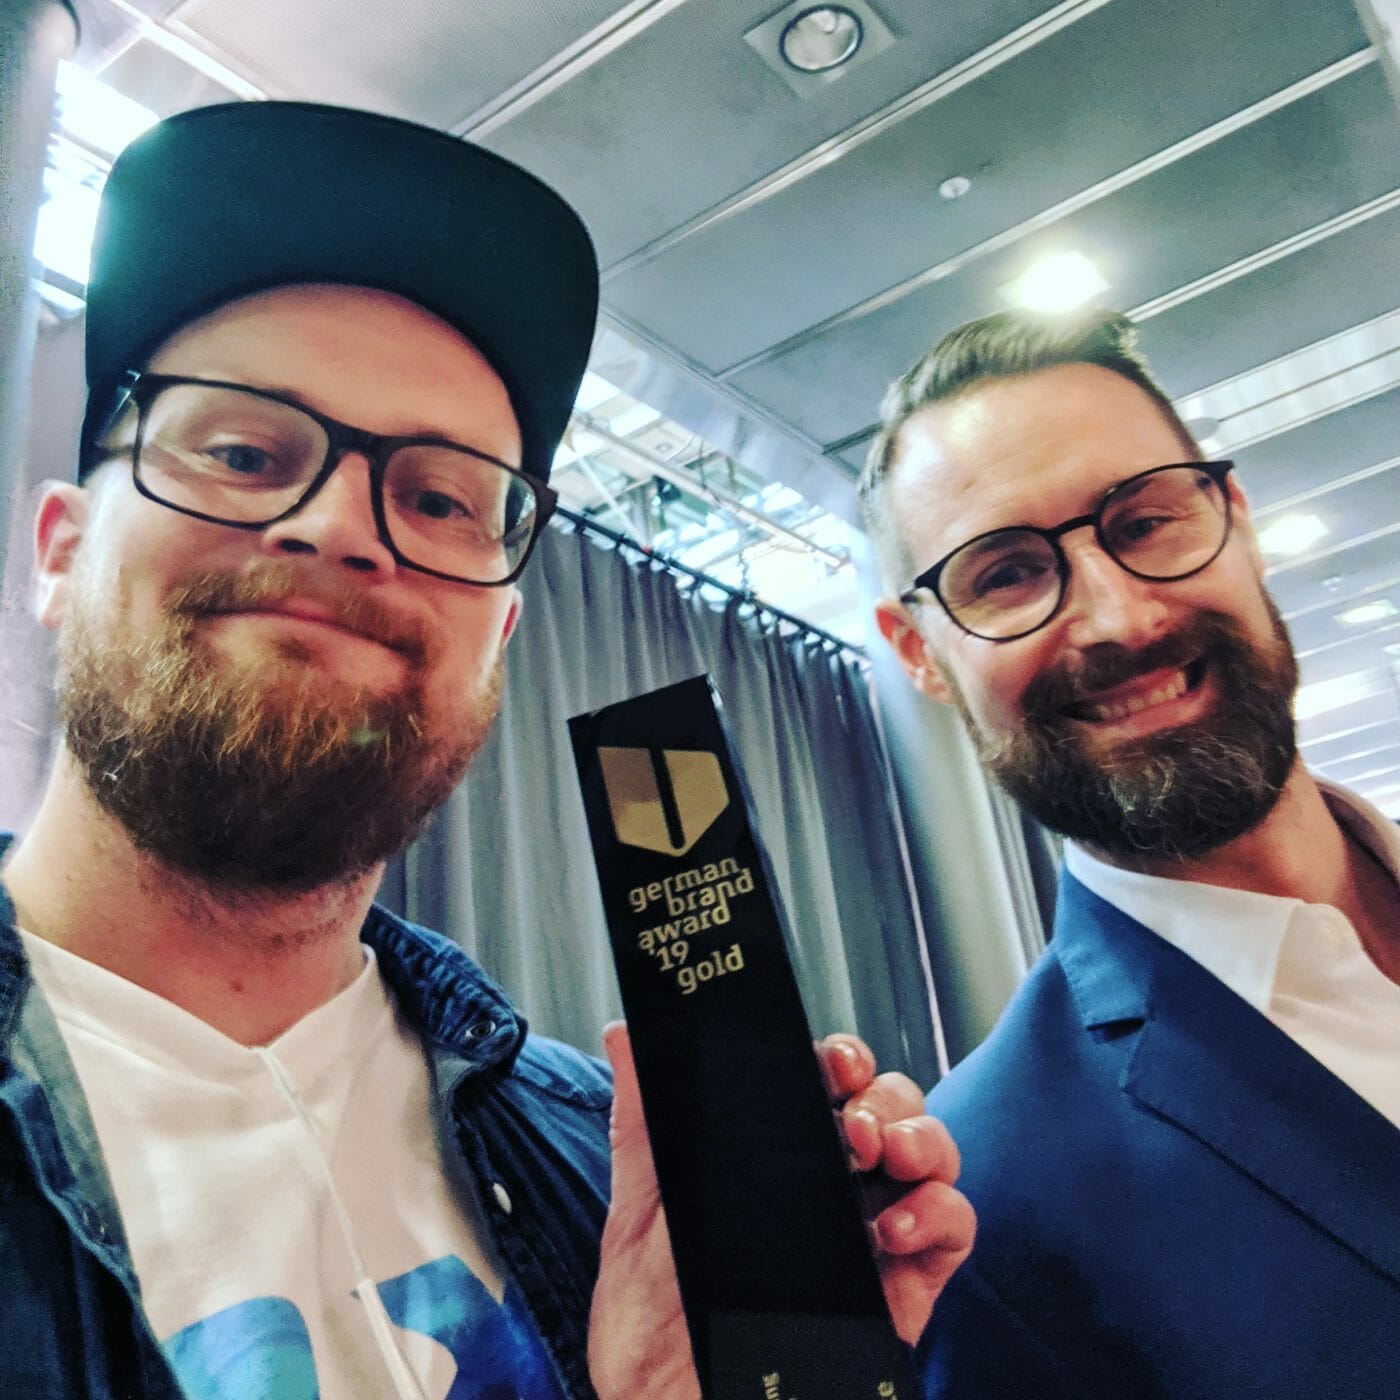 nexible holt german brand award 2019